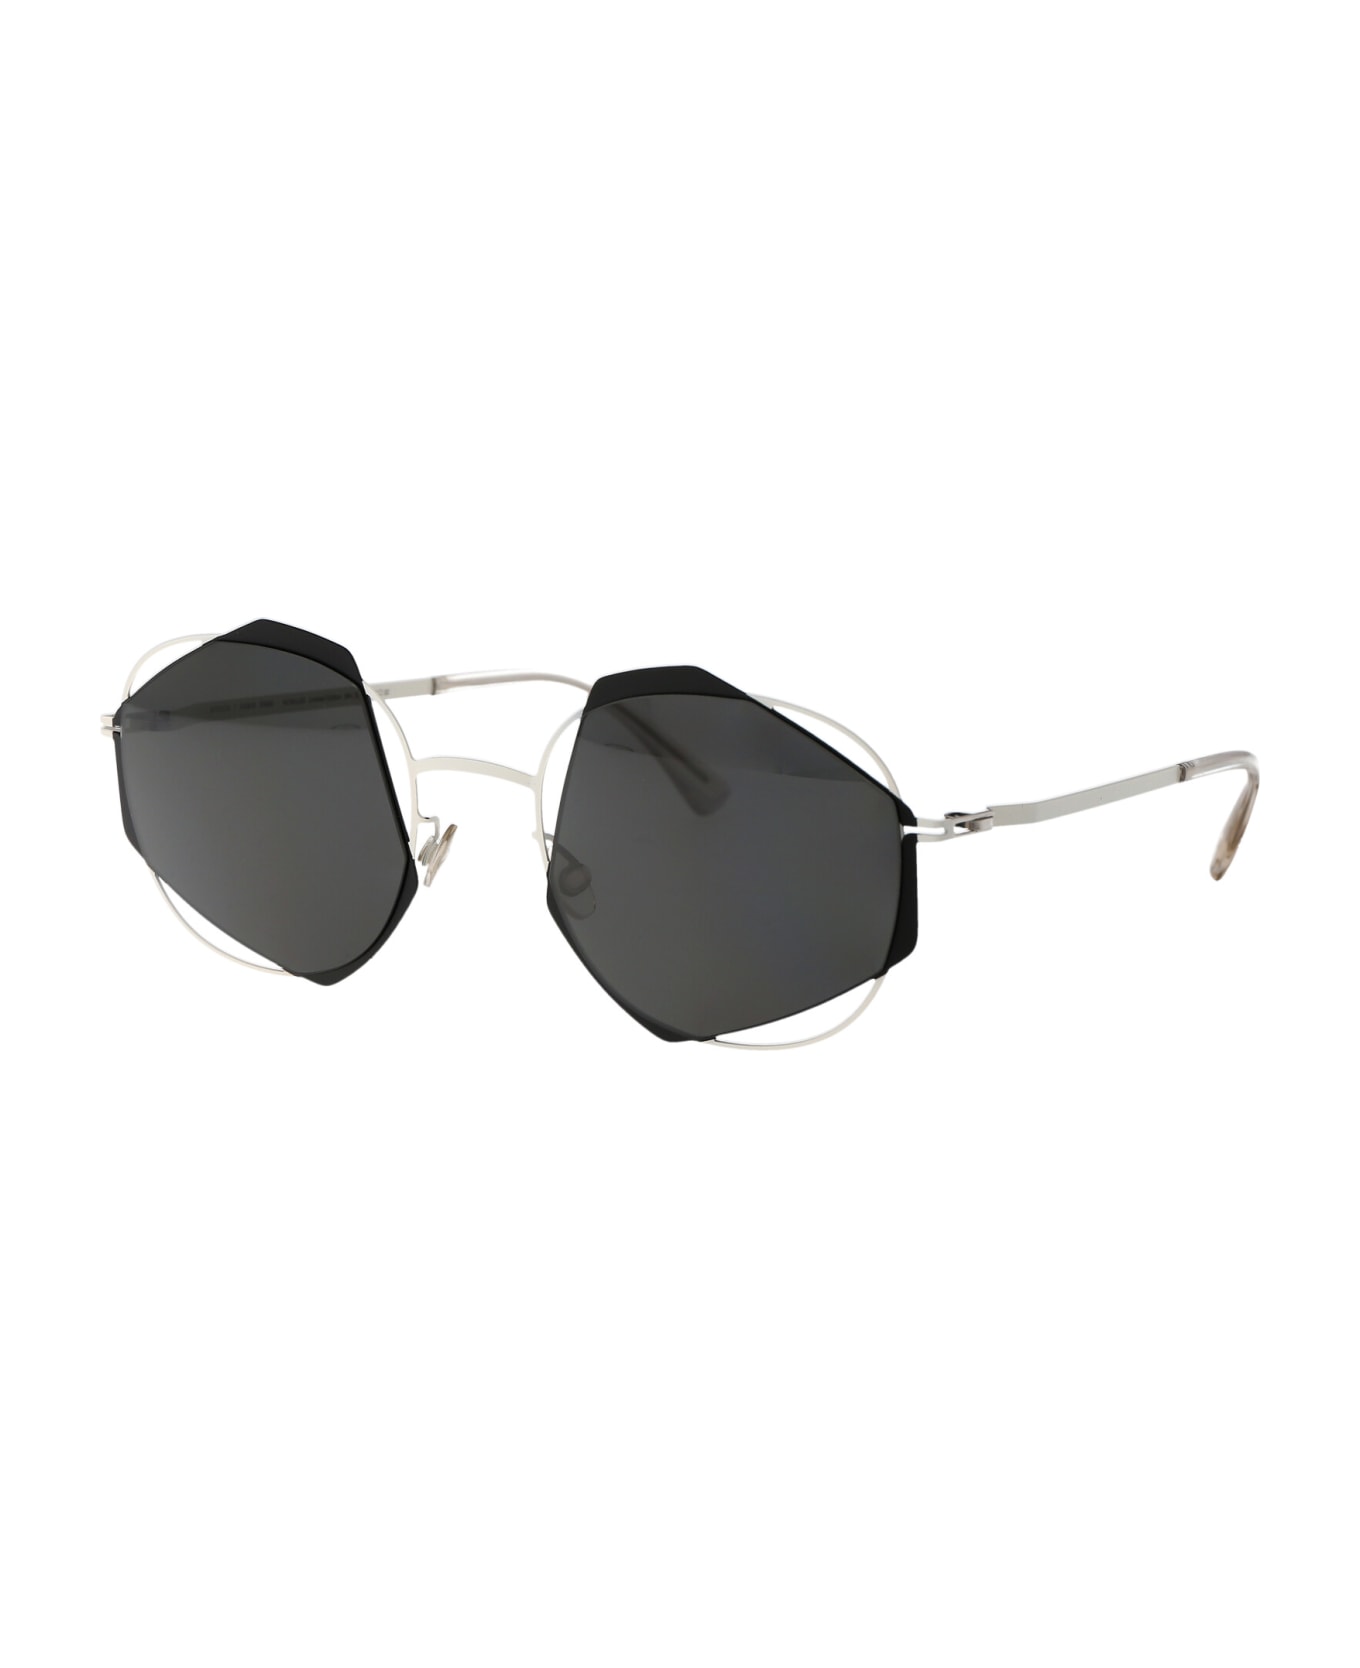 Mykita Achilles Sunglasses - 424 Antique White/Black Darkgrey Solid 